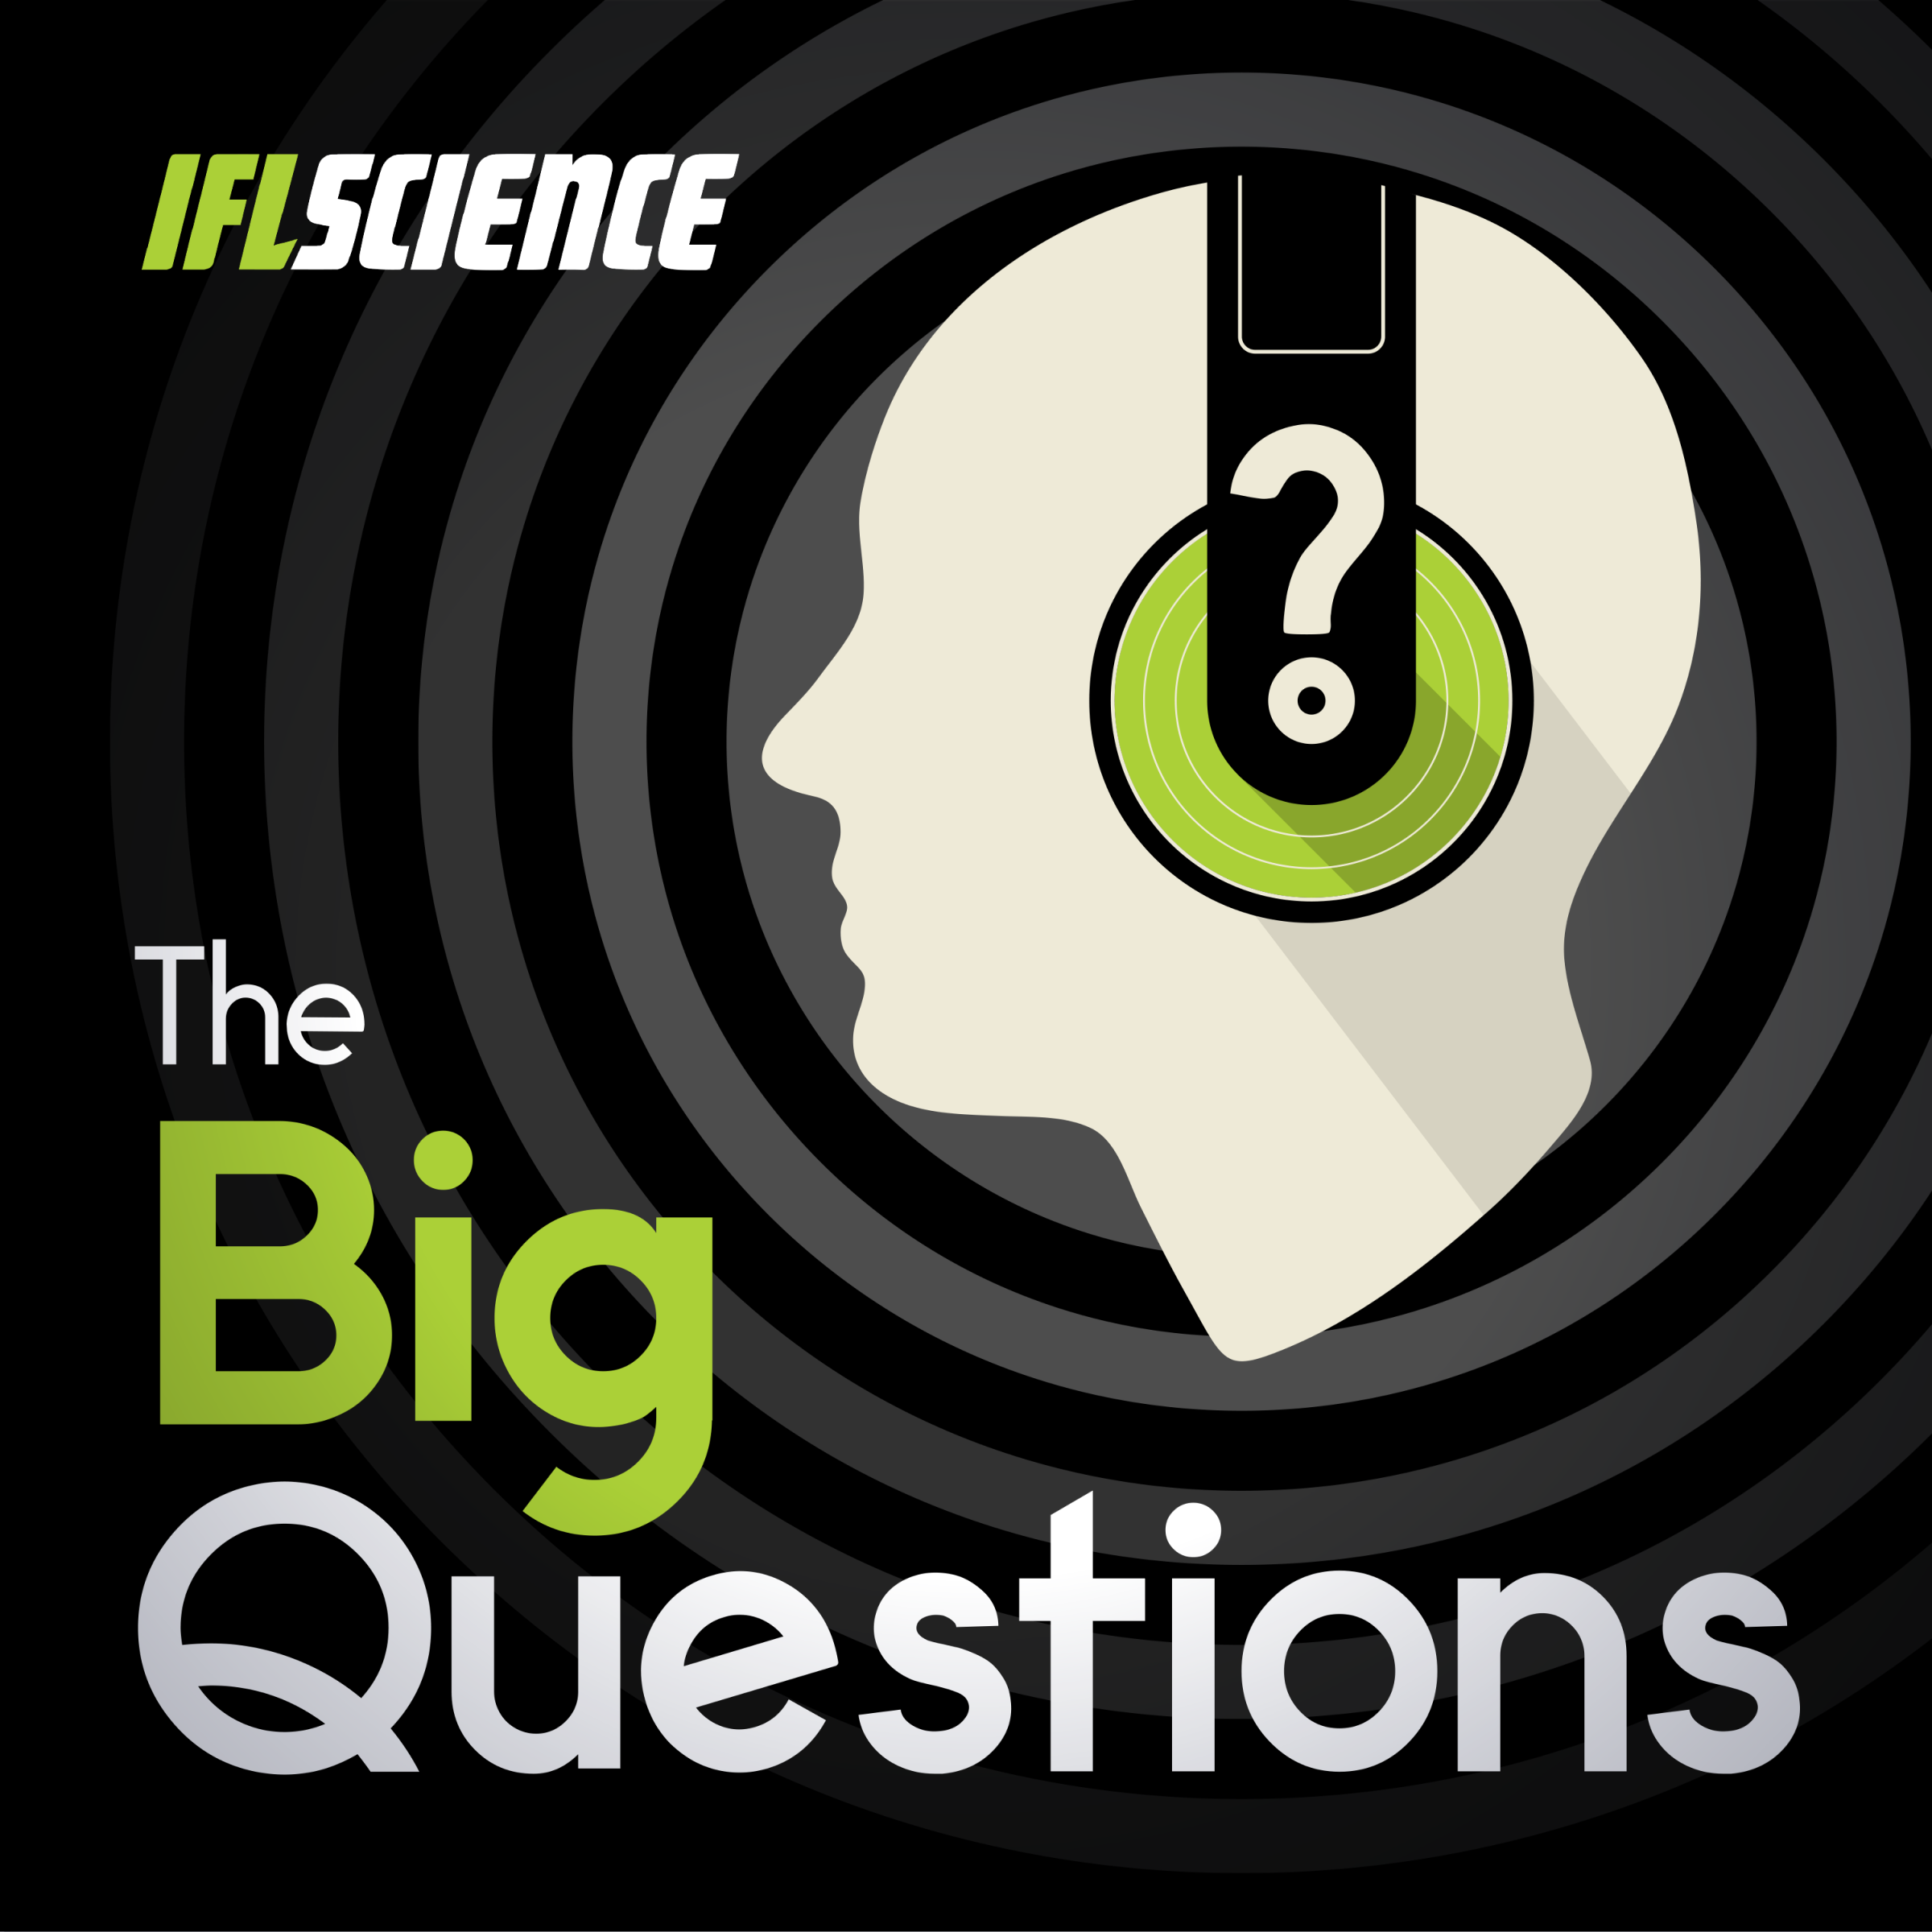 IFLScience - The Big Questions Image